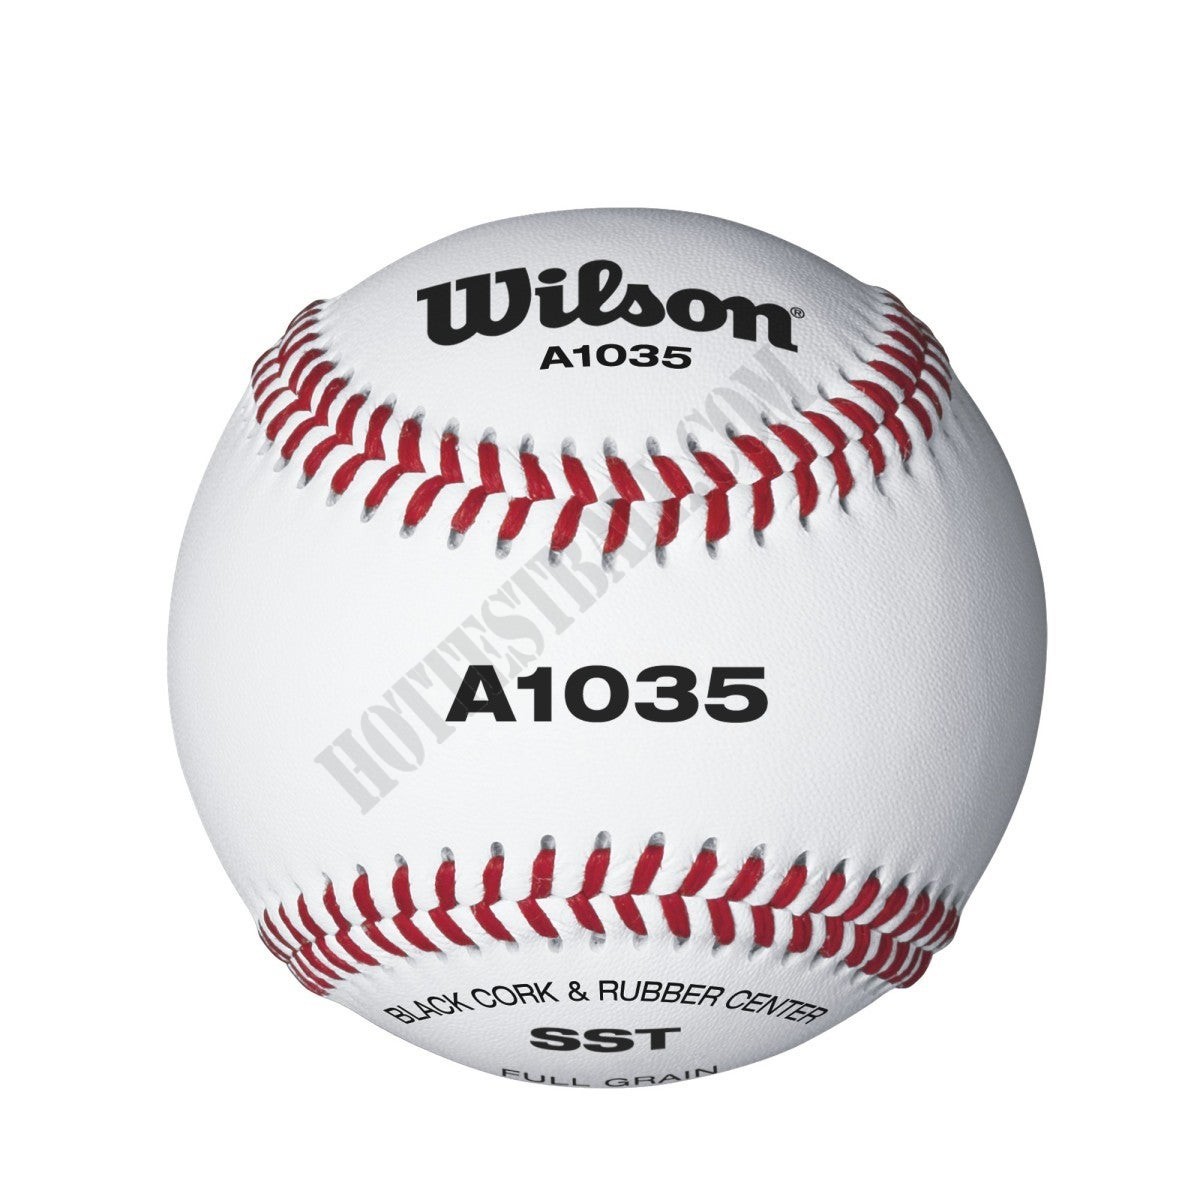 A1035 Champion Series SST Baseballs - Wilson Discount Store - -0